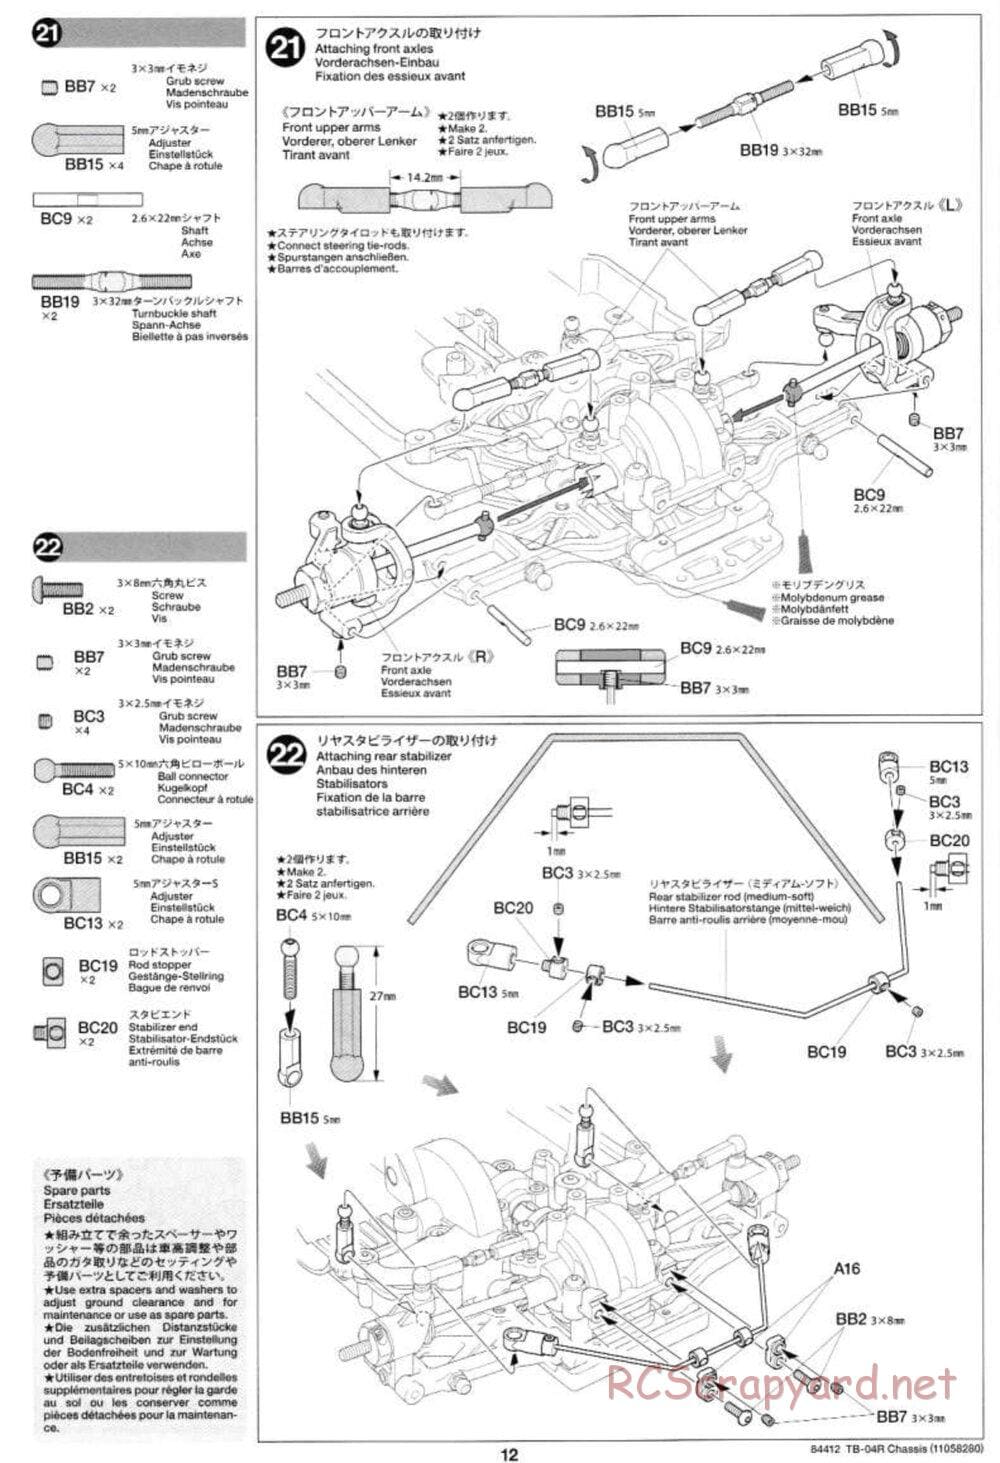 Tamiya - TB-04R Chassis Chassis - Manual - Page 12